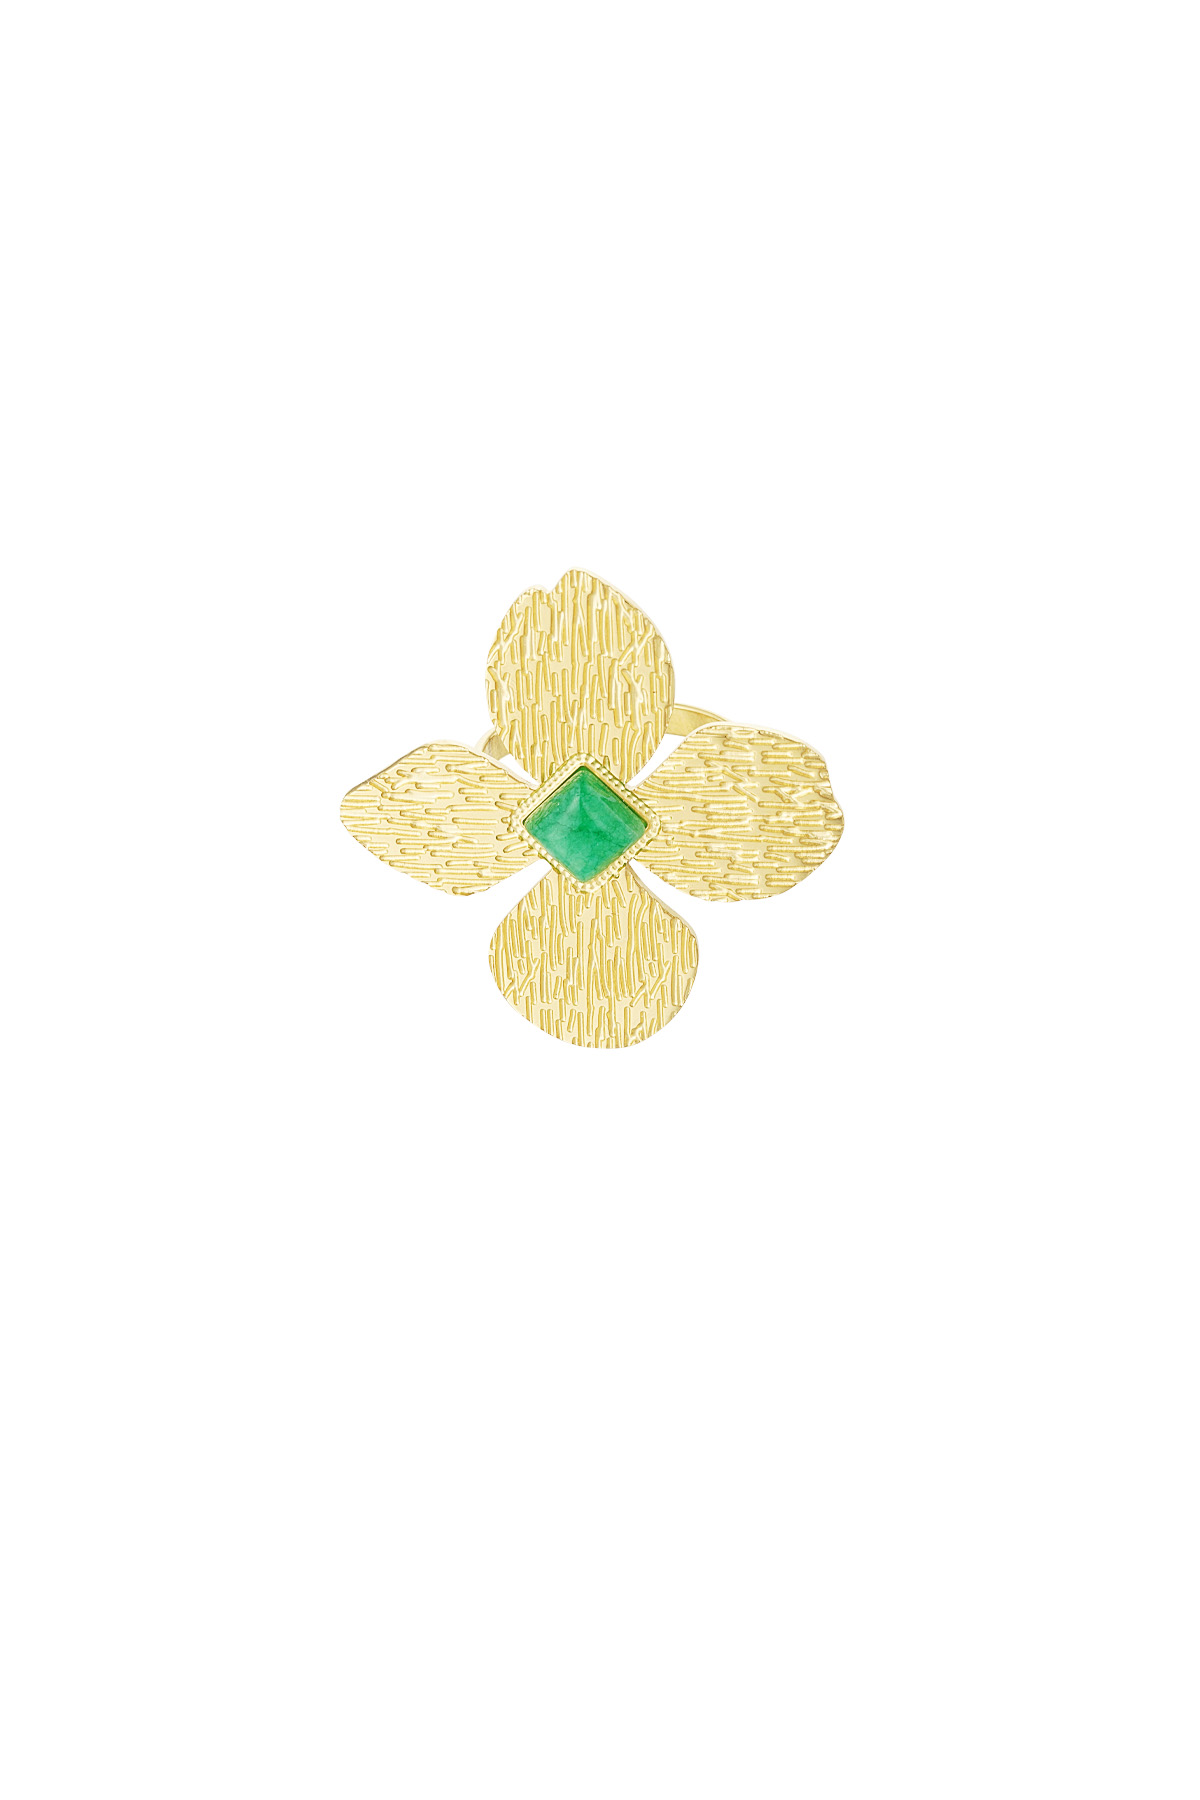 Anillo flor con piedra verde - oro 